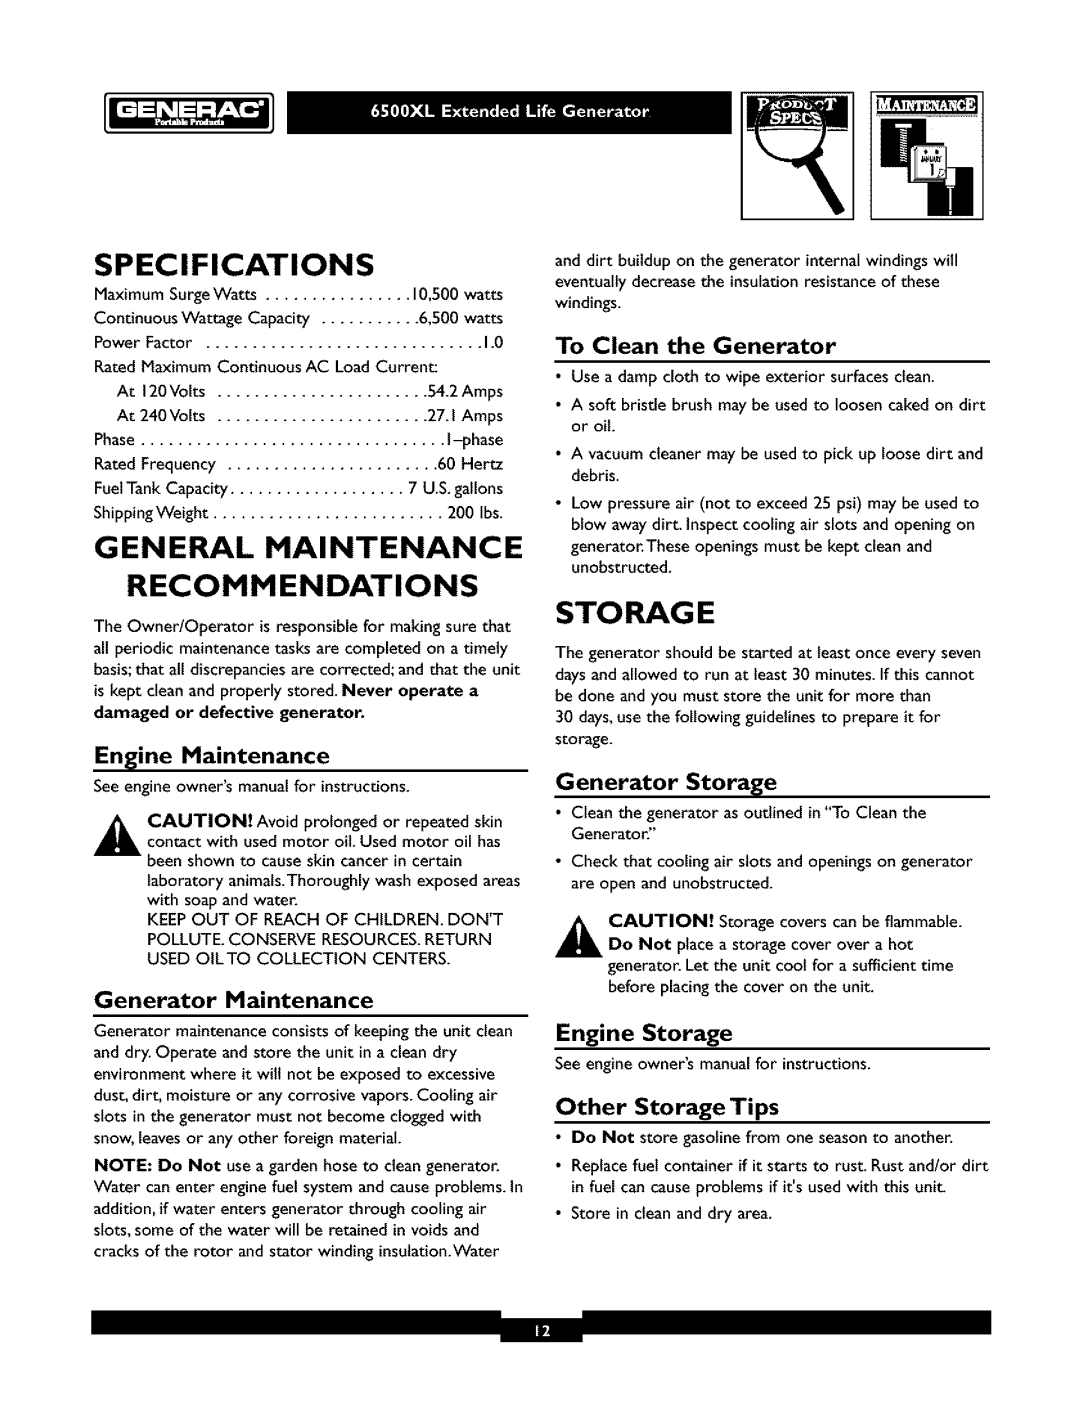 Generac 6500XL Specifications, General Maintenance Recommendations, Sto Rag E, Engine Maintenance, Generator Maintenance 